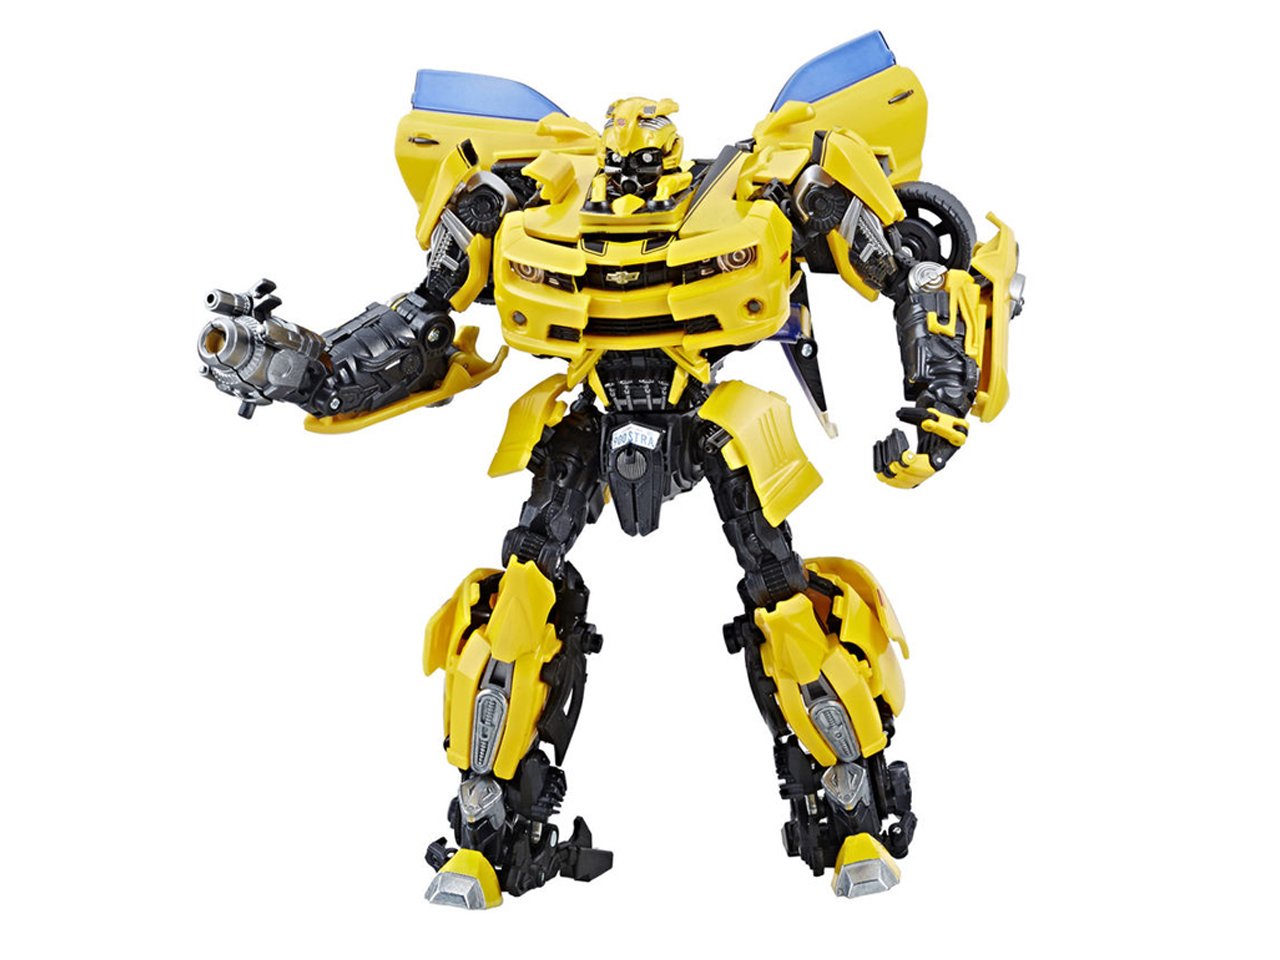 Bumblebee Transformers action figure